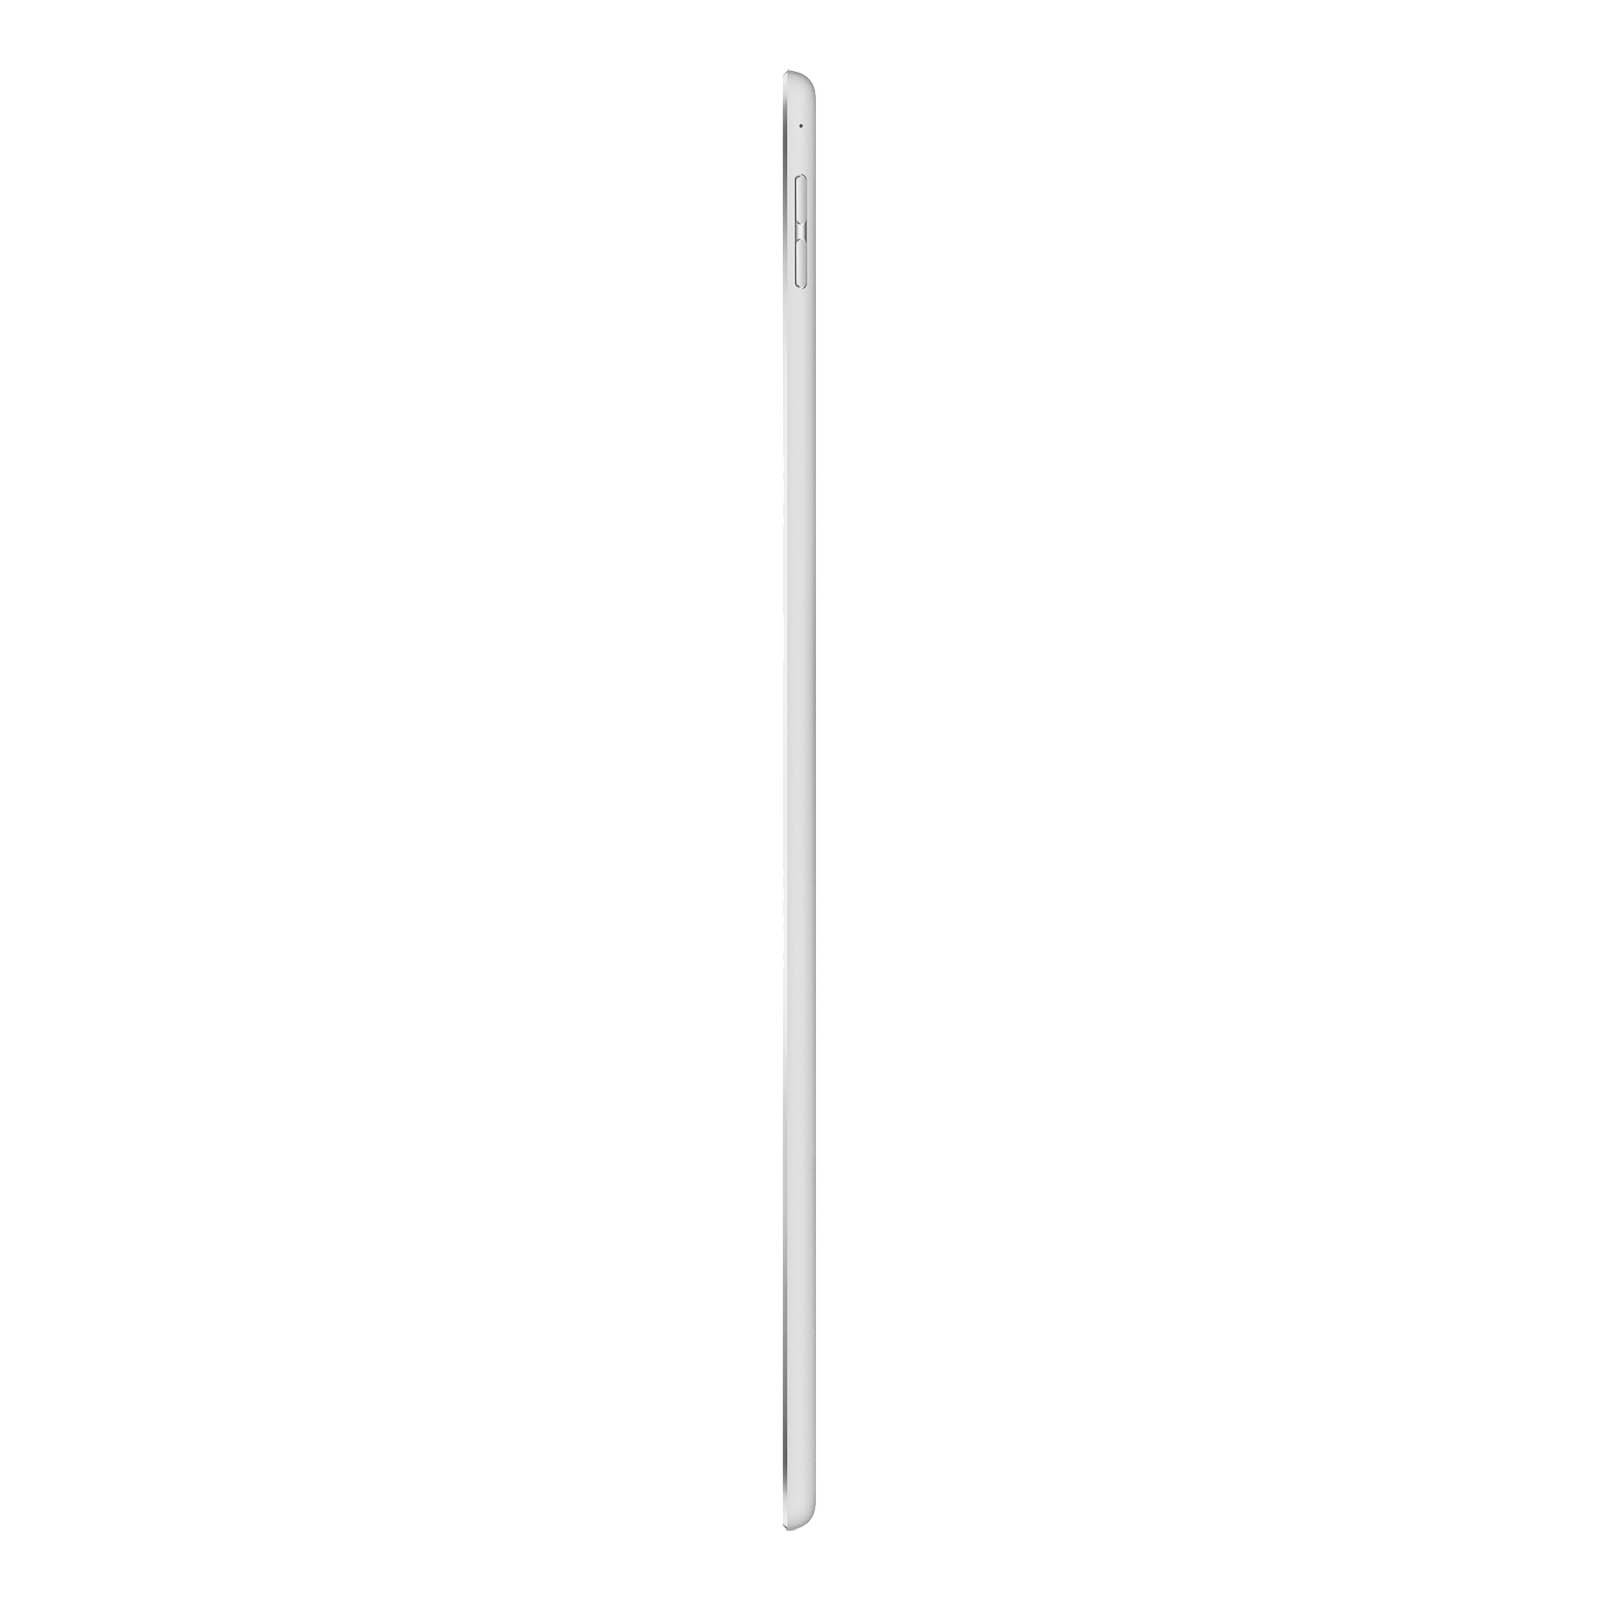 iPad Pro 12.9 Inch 2nd Gen 256GB Silver Pristine - Unlocked